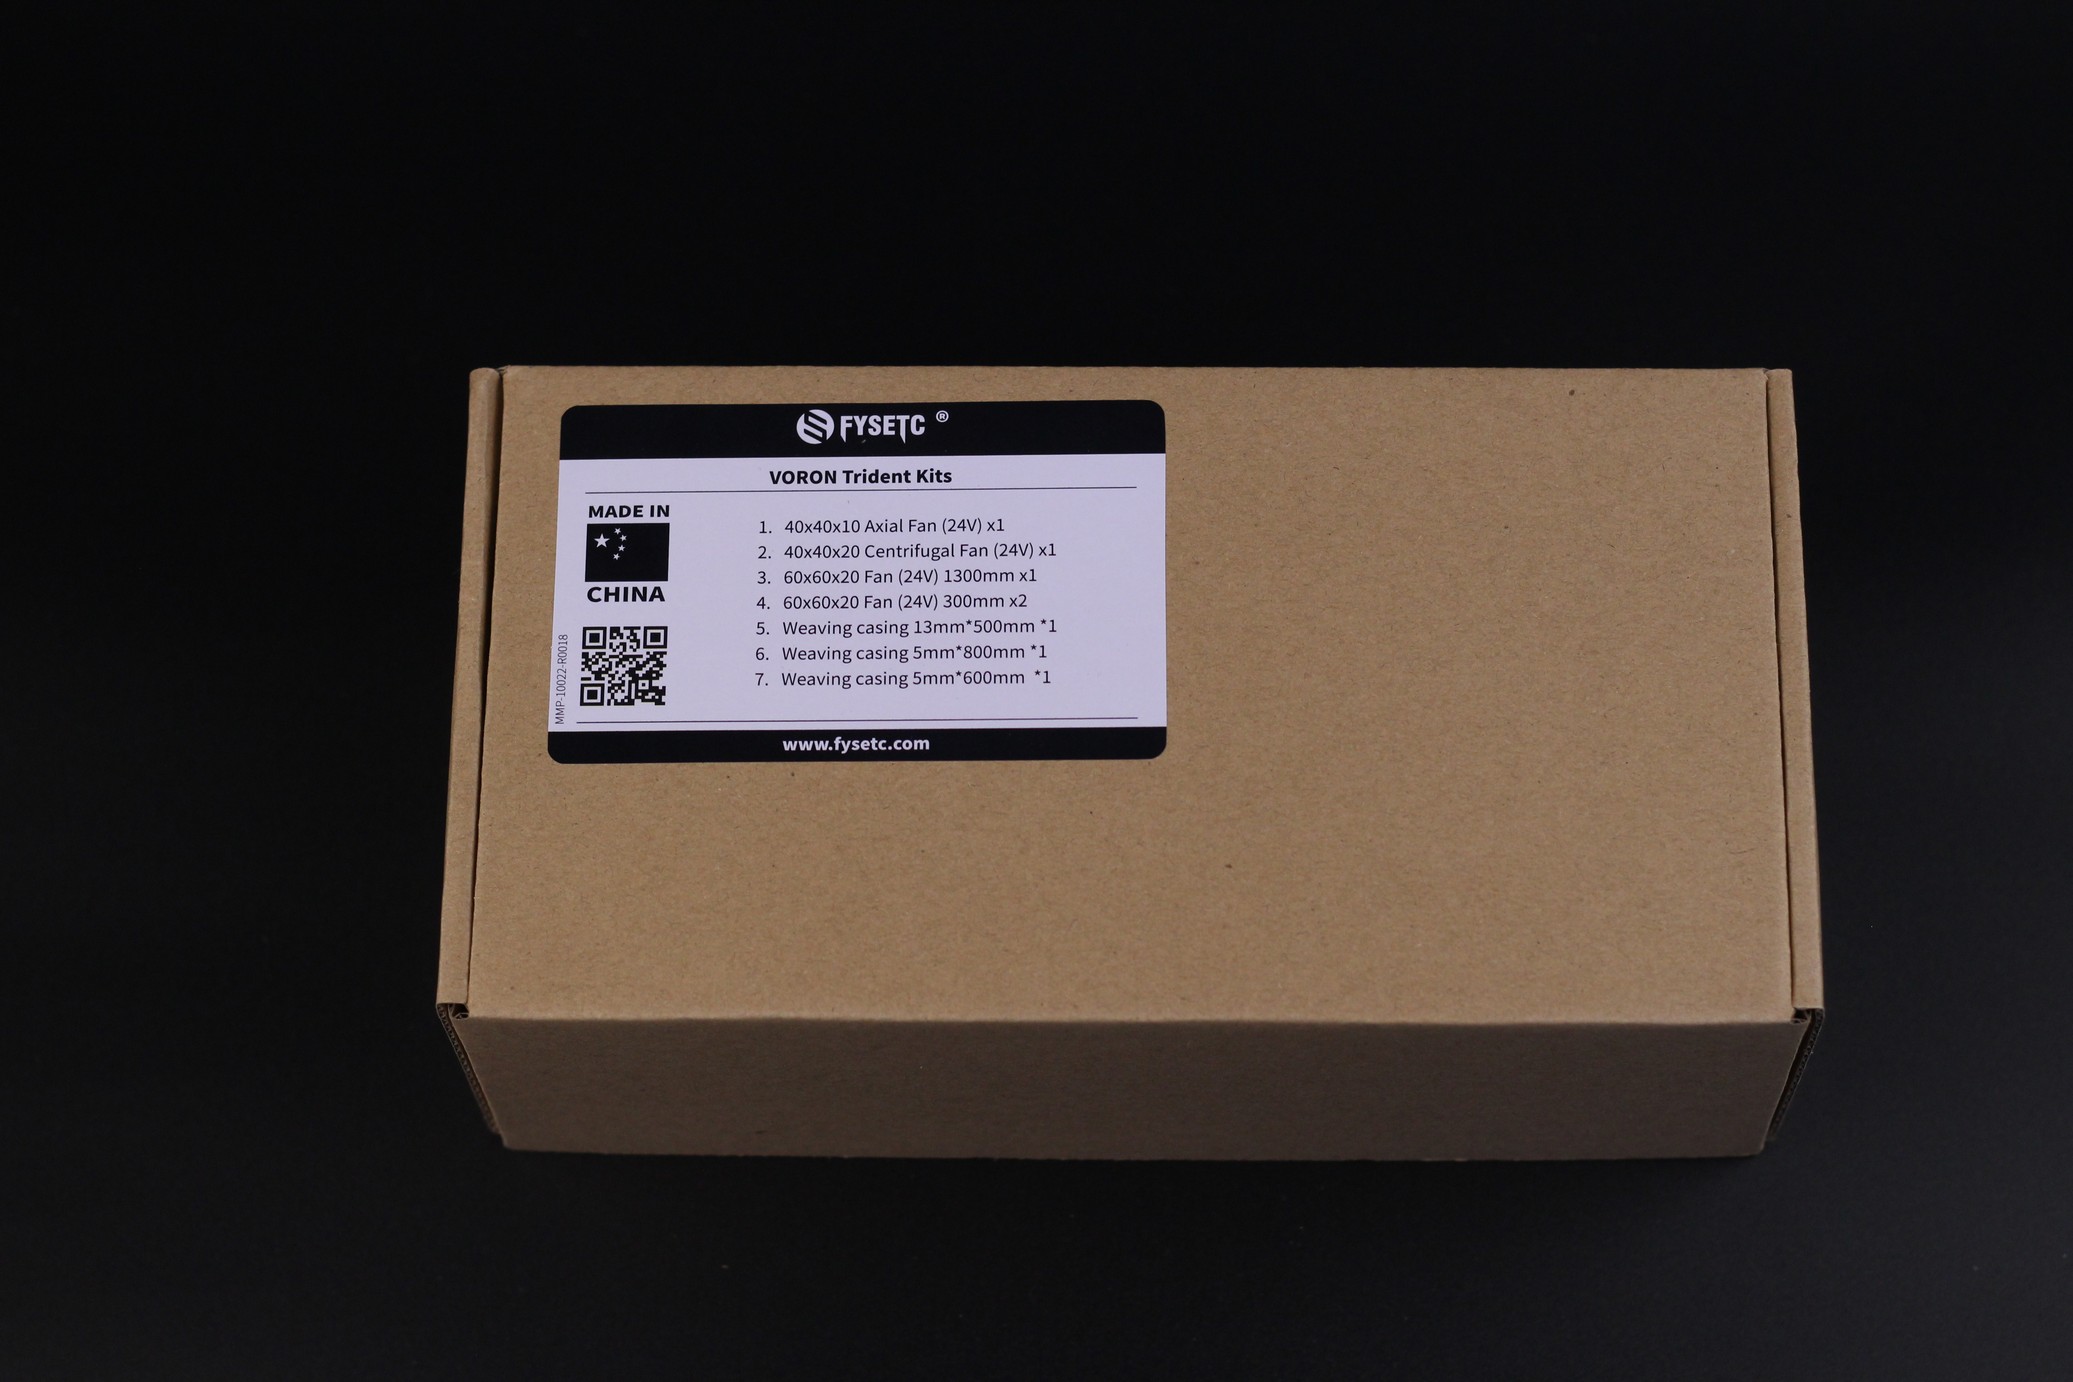 VORON Trident Kit Fans 2 | VORON Trident FYSETC Kit Review: Is it worth it?